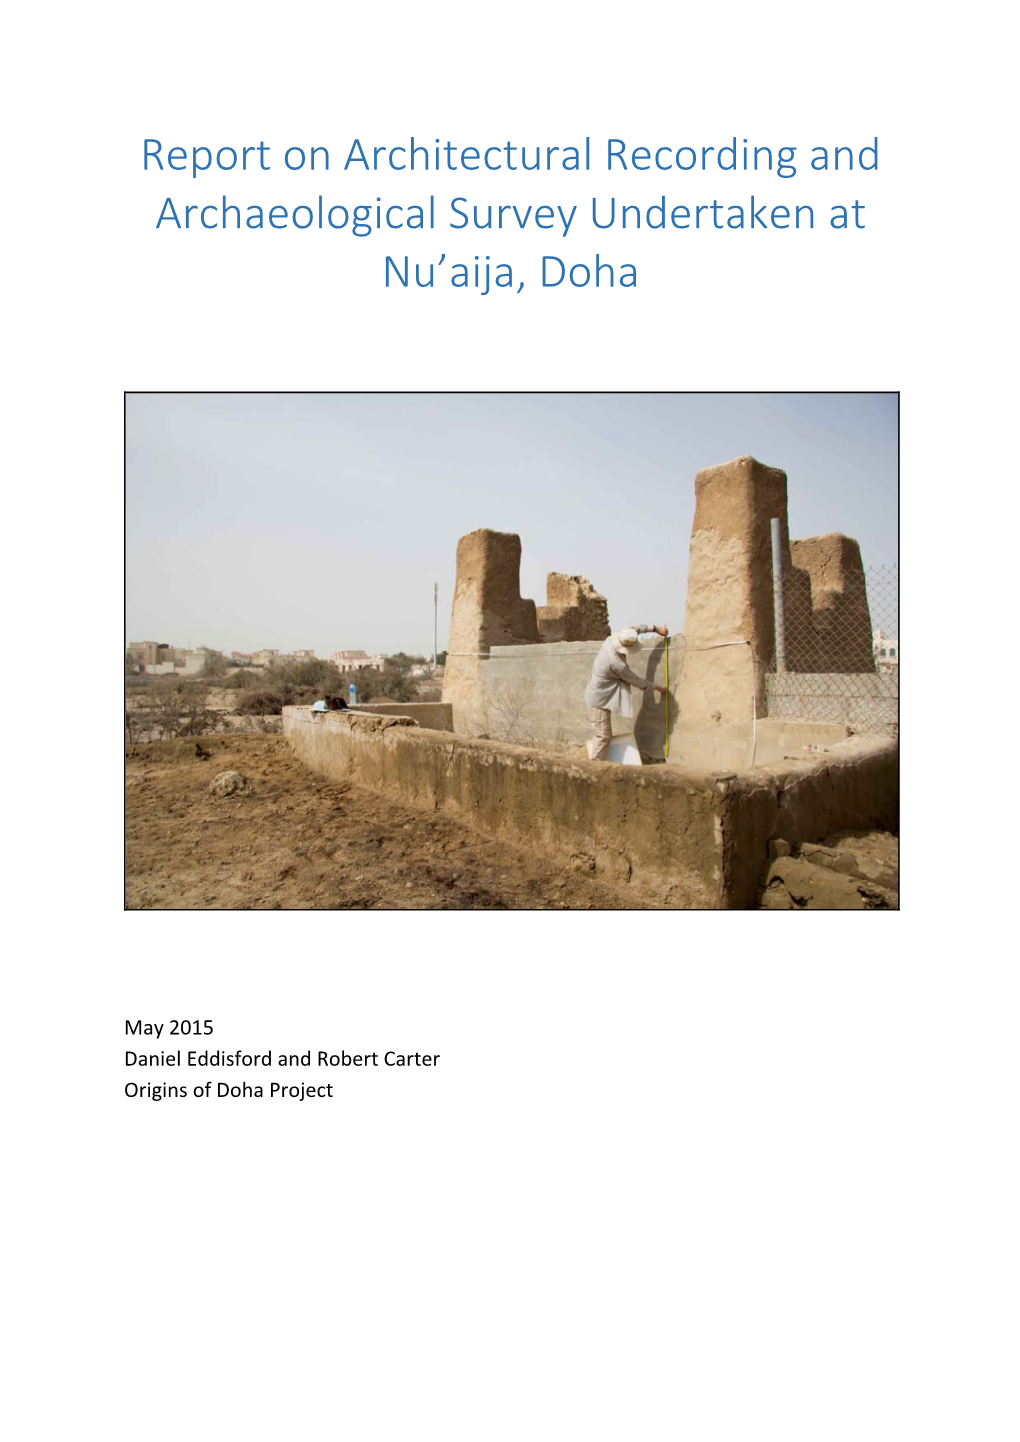 Origins of Doha and Qatar Season 3 – Nuaija Survey Report